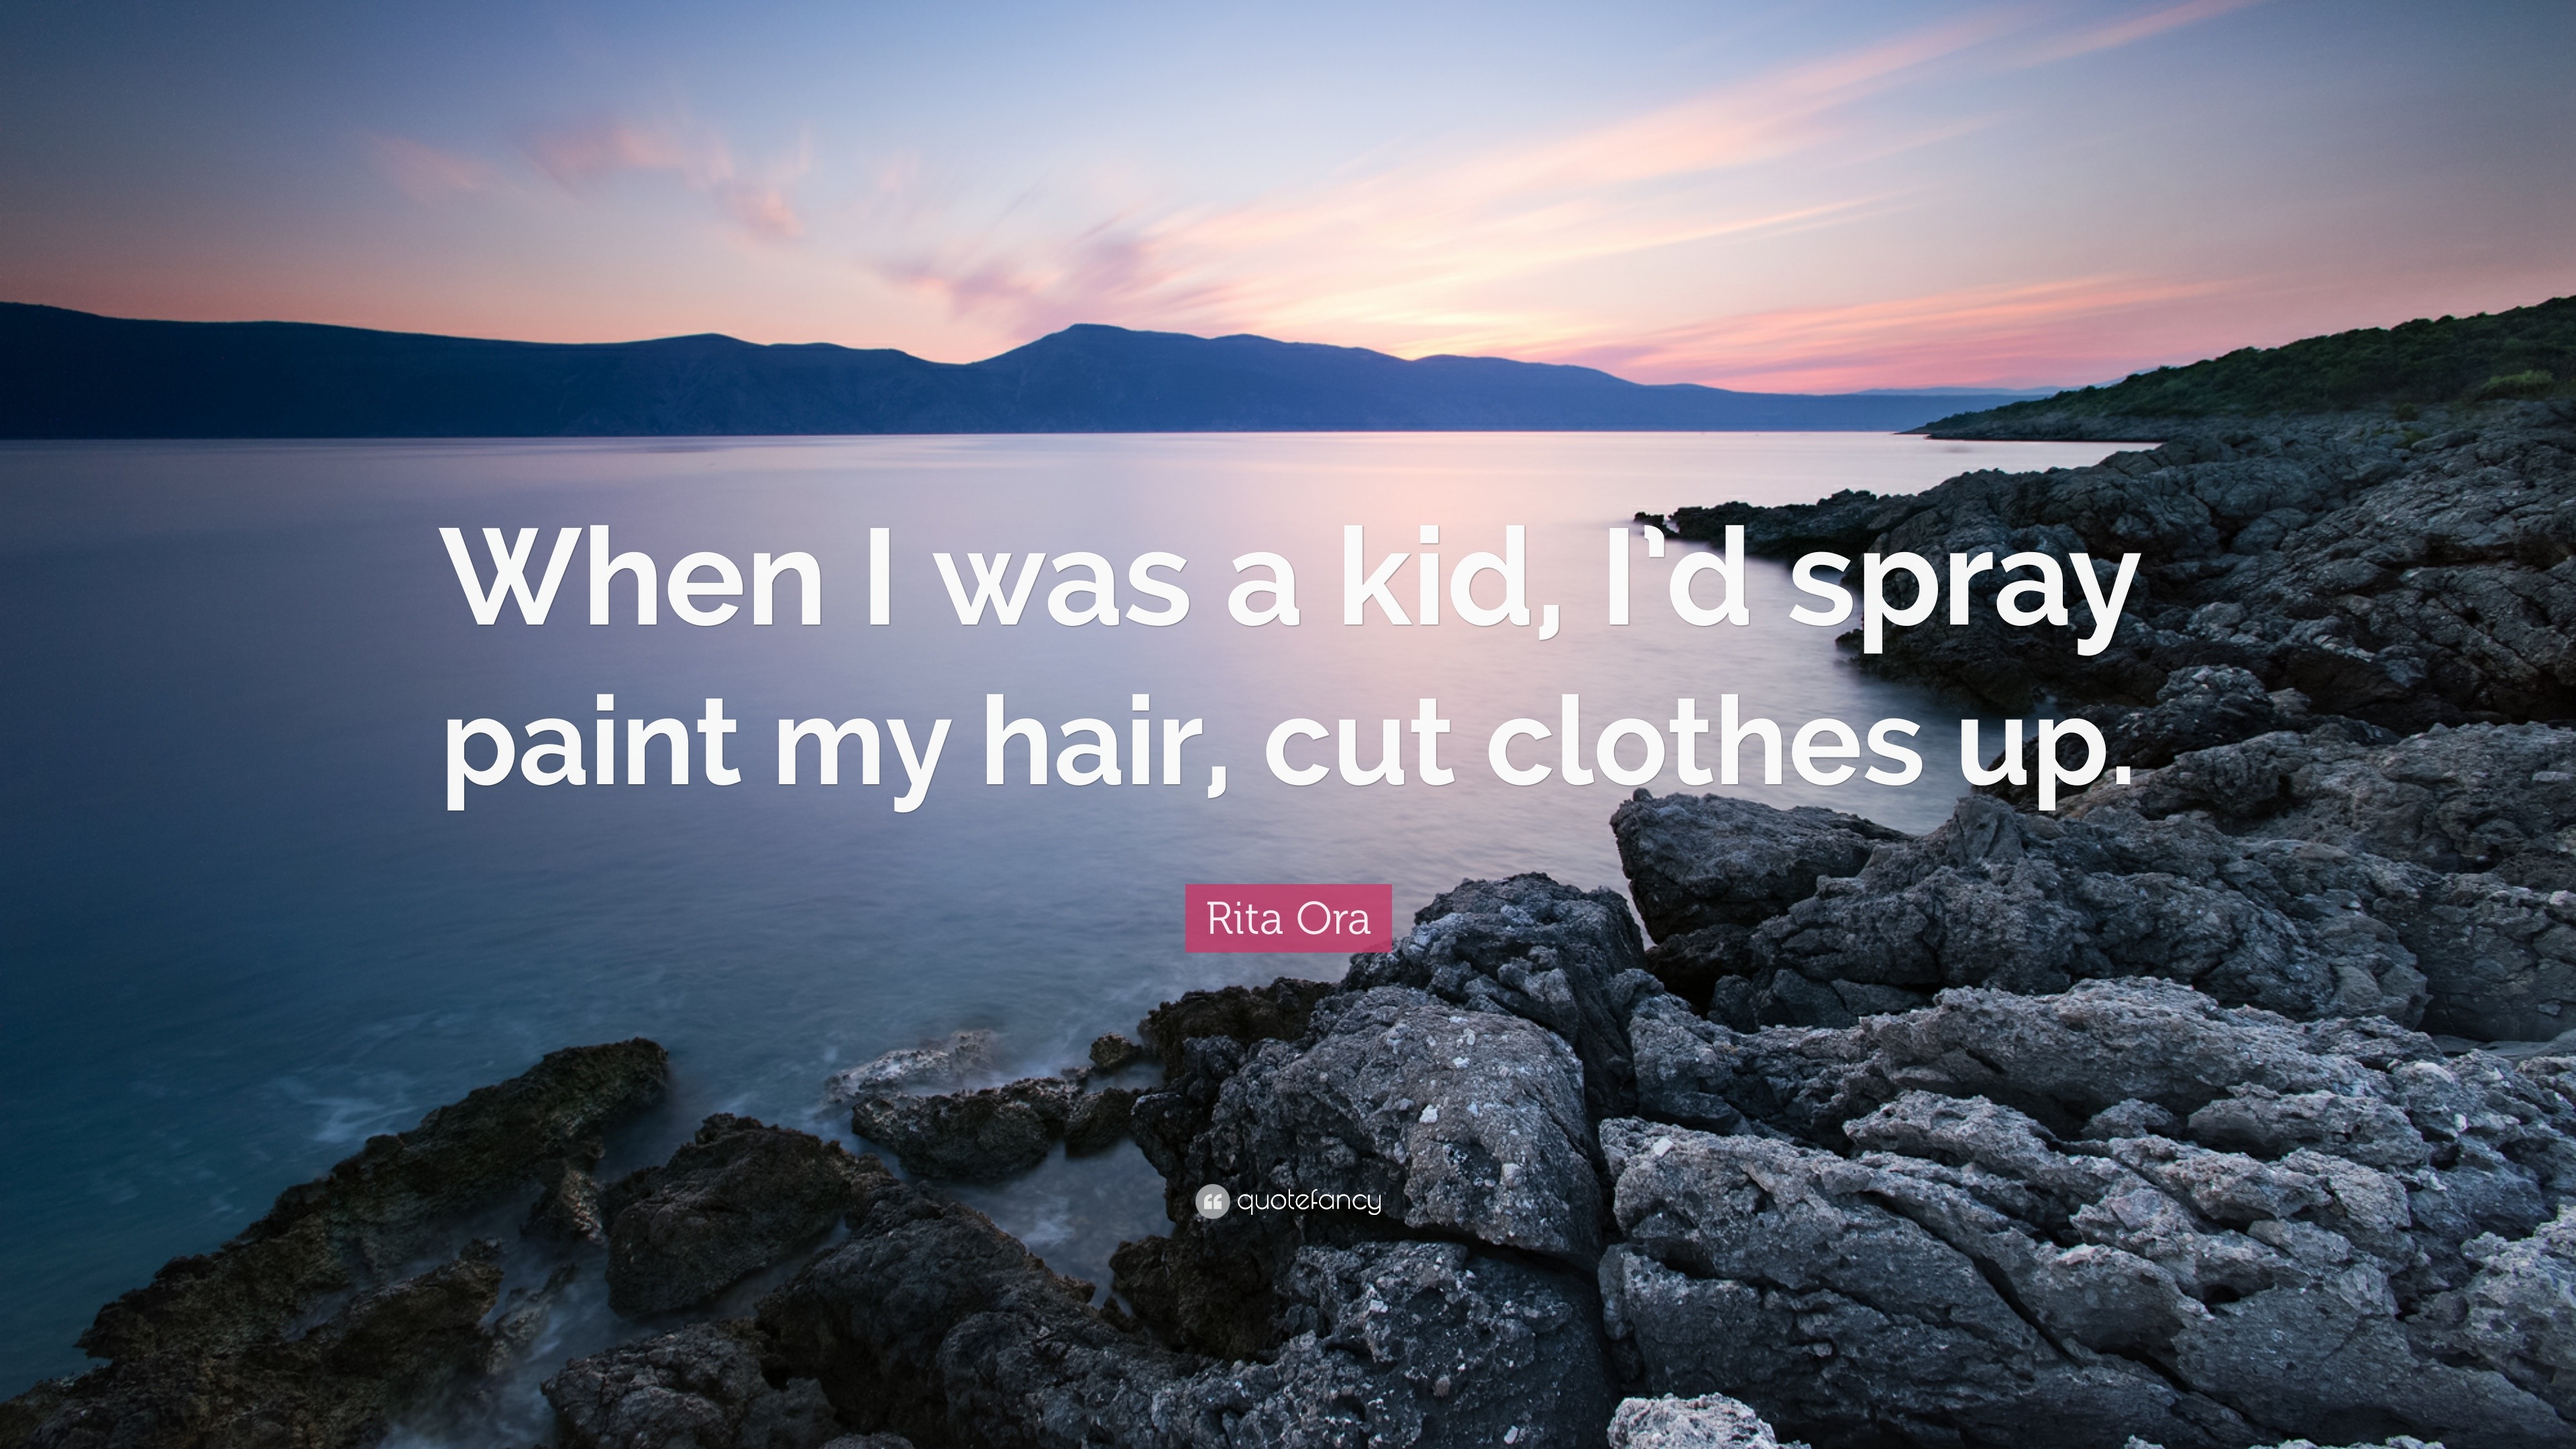 Rita Ora Quote: “When I was a kid, I'd spray paint my hair, cut clothes